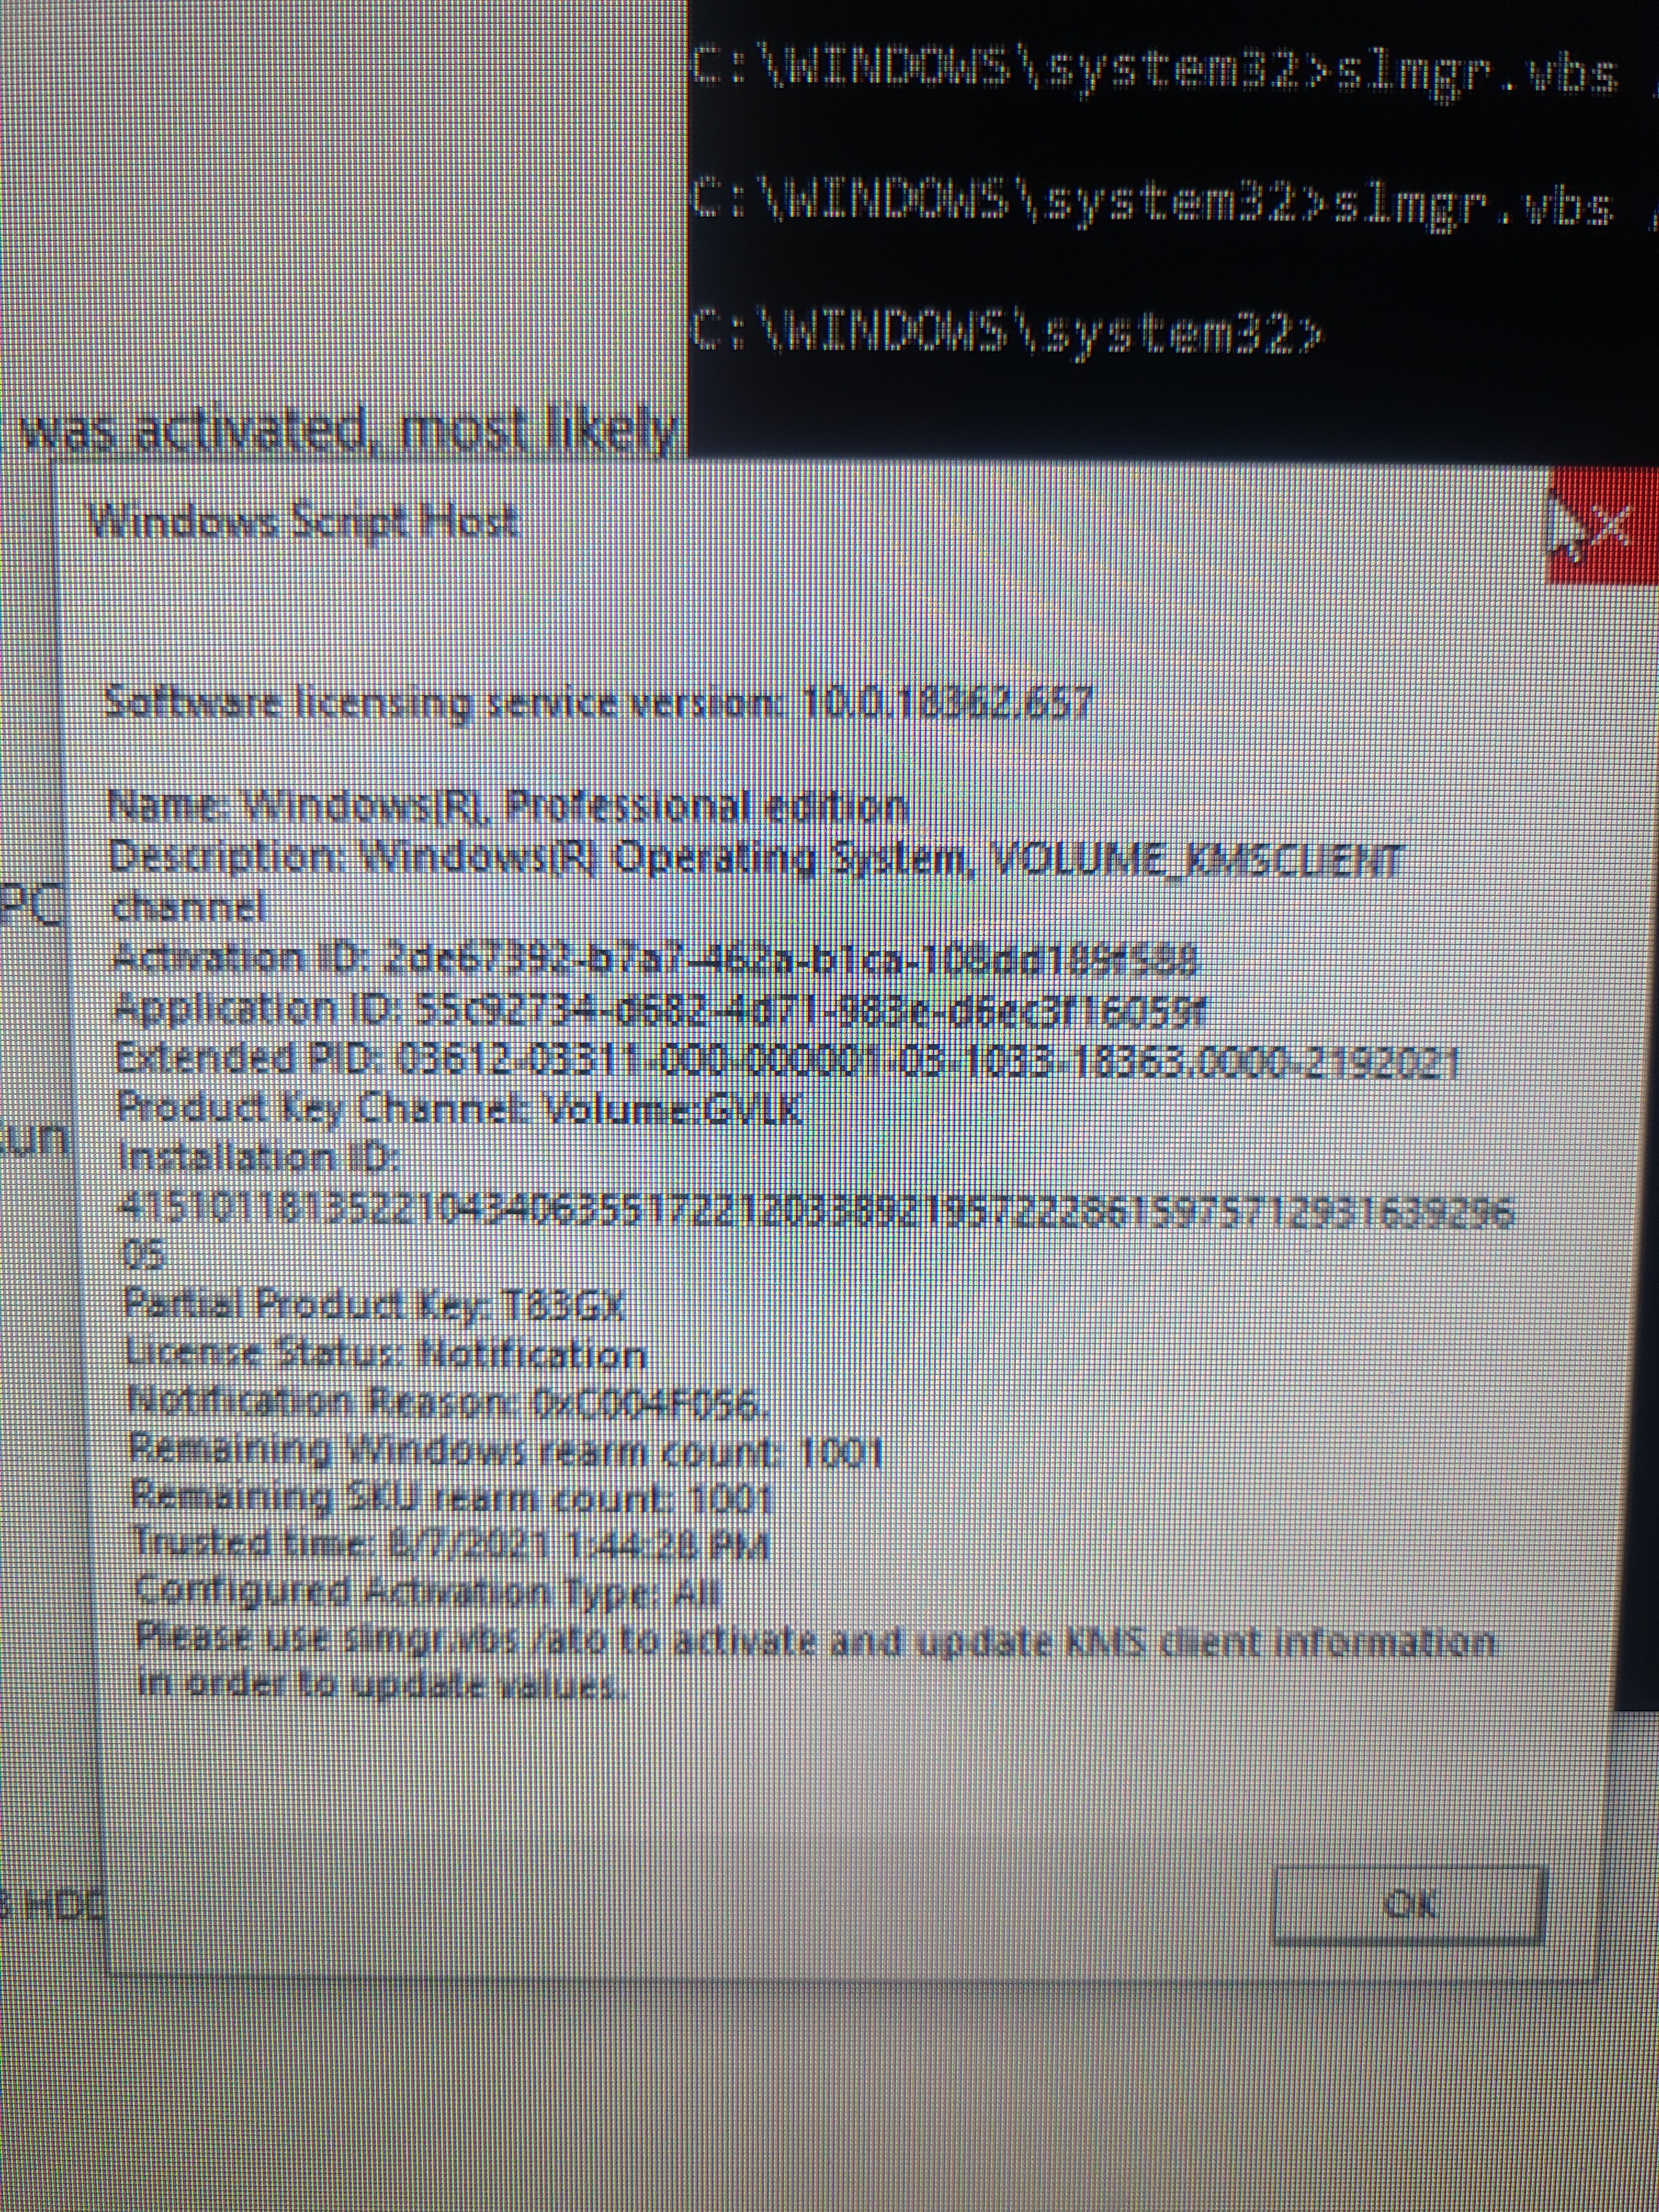 UM790 Pro Gaming PC AMD Ryzen 9 32GB 2x 256SSD Windows 10 Not activated